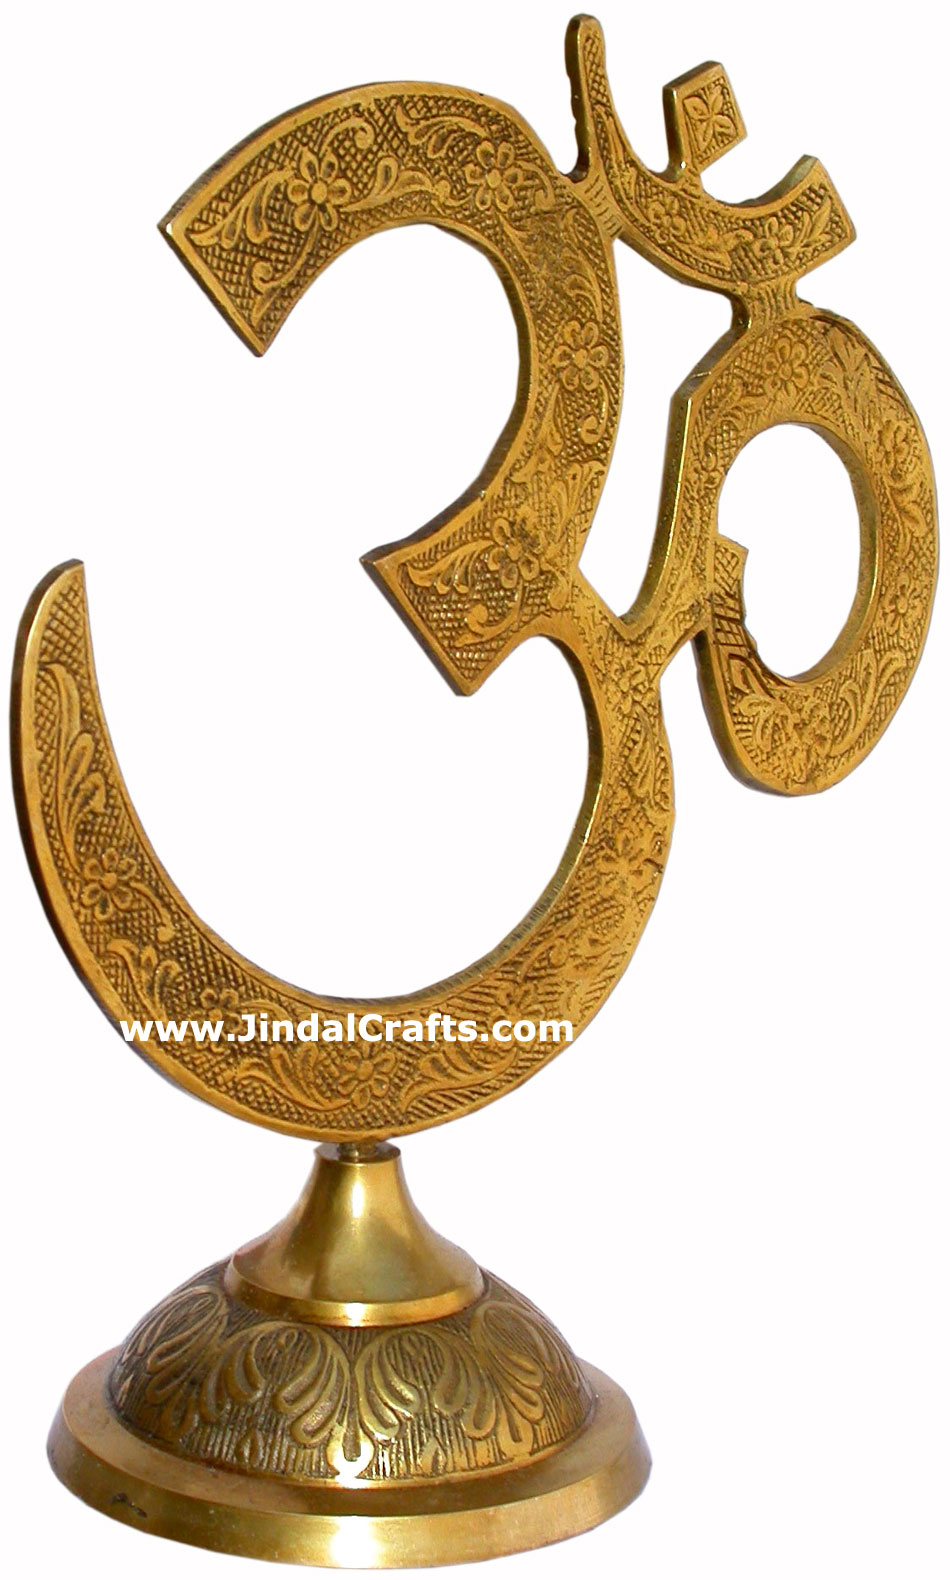 OM Holy Symbol of Hindu Religion Indian Art Craft Handicraft Home Decor Figurine